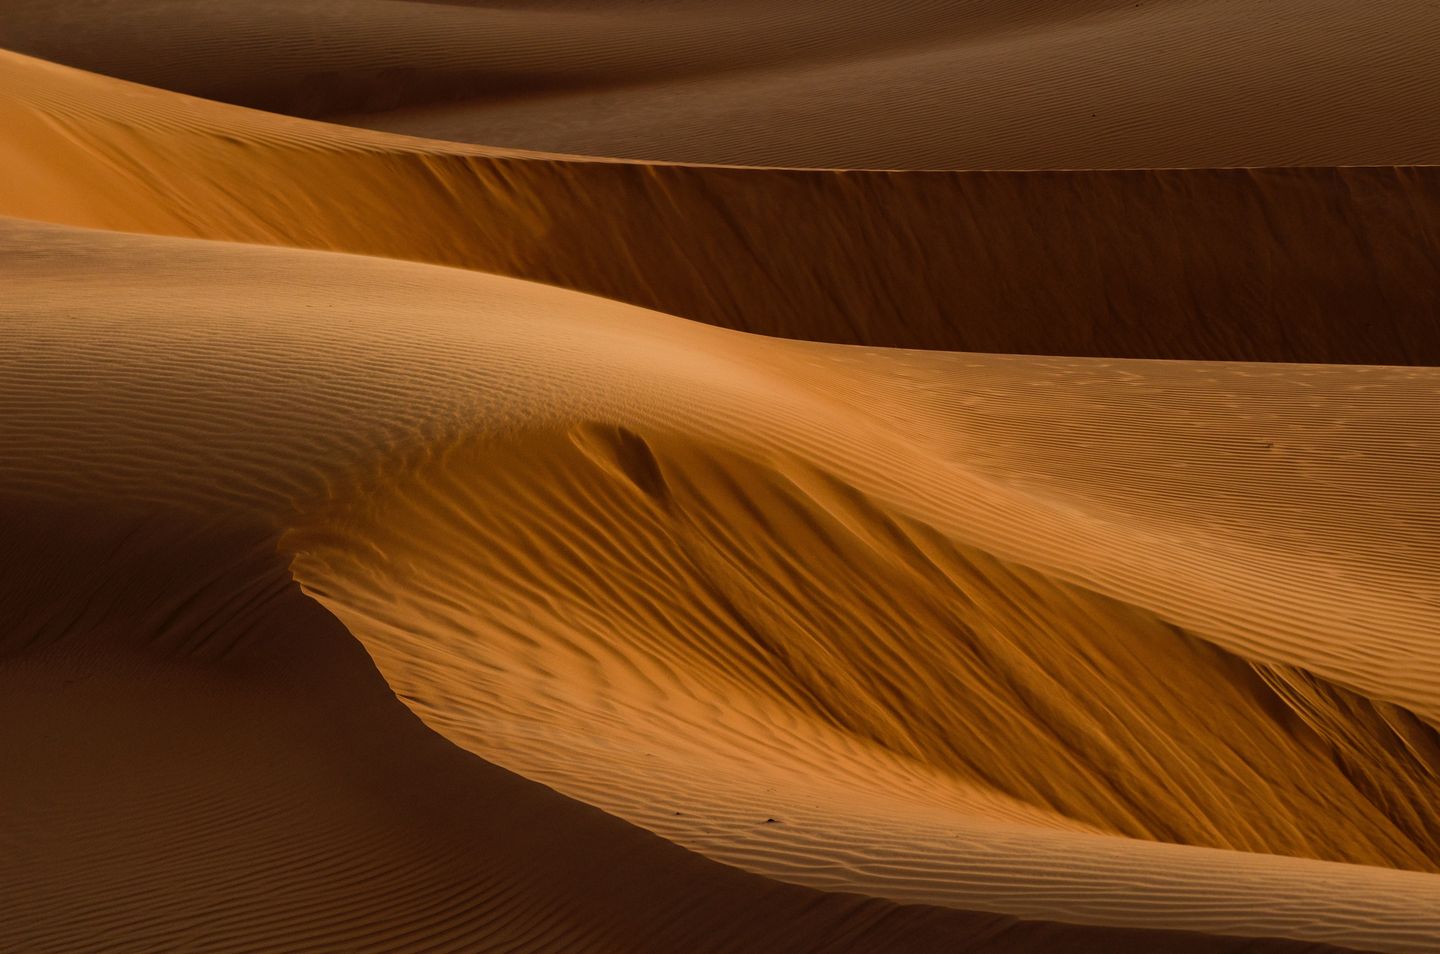 Pasir yang berada di gurun pasir juga termasuk dalam kategori barang bebas.